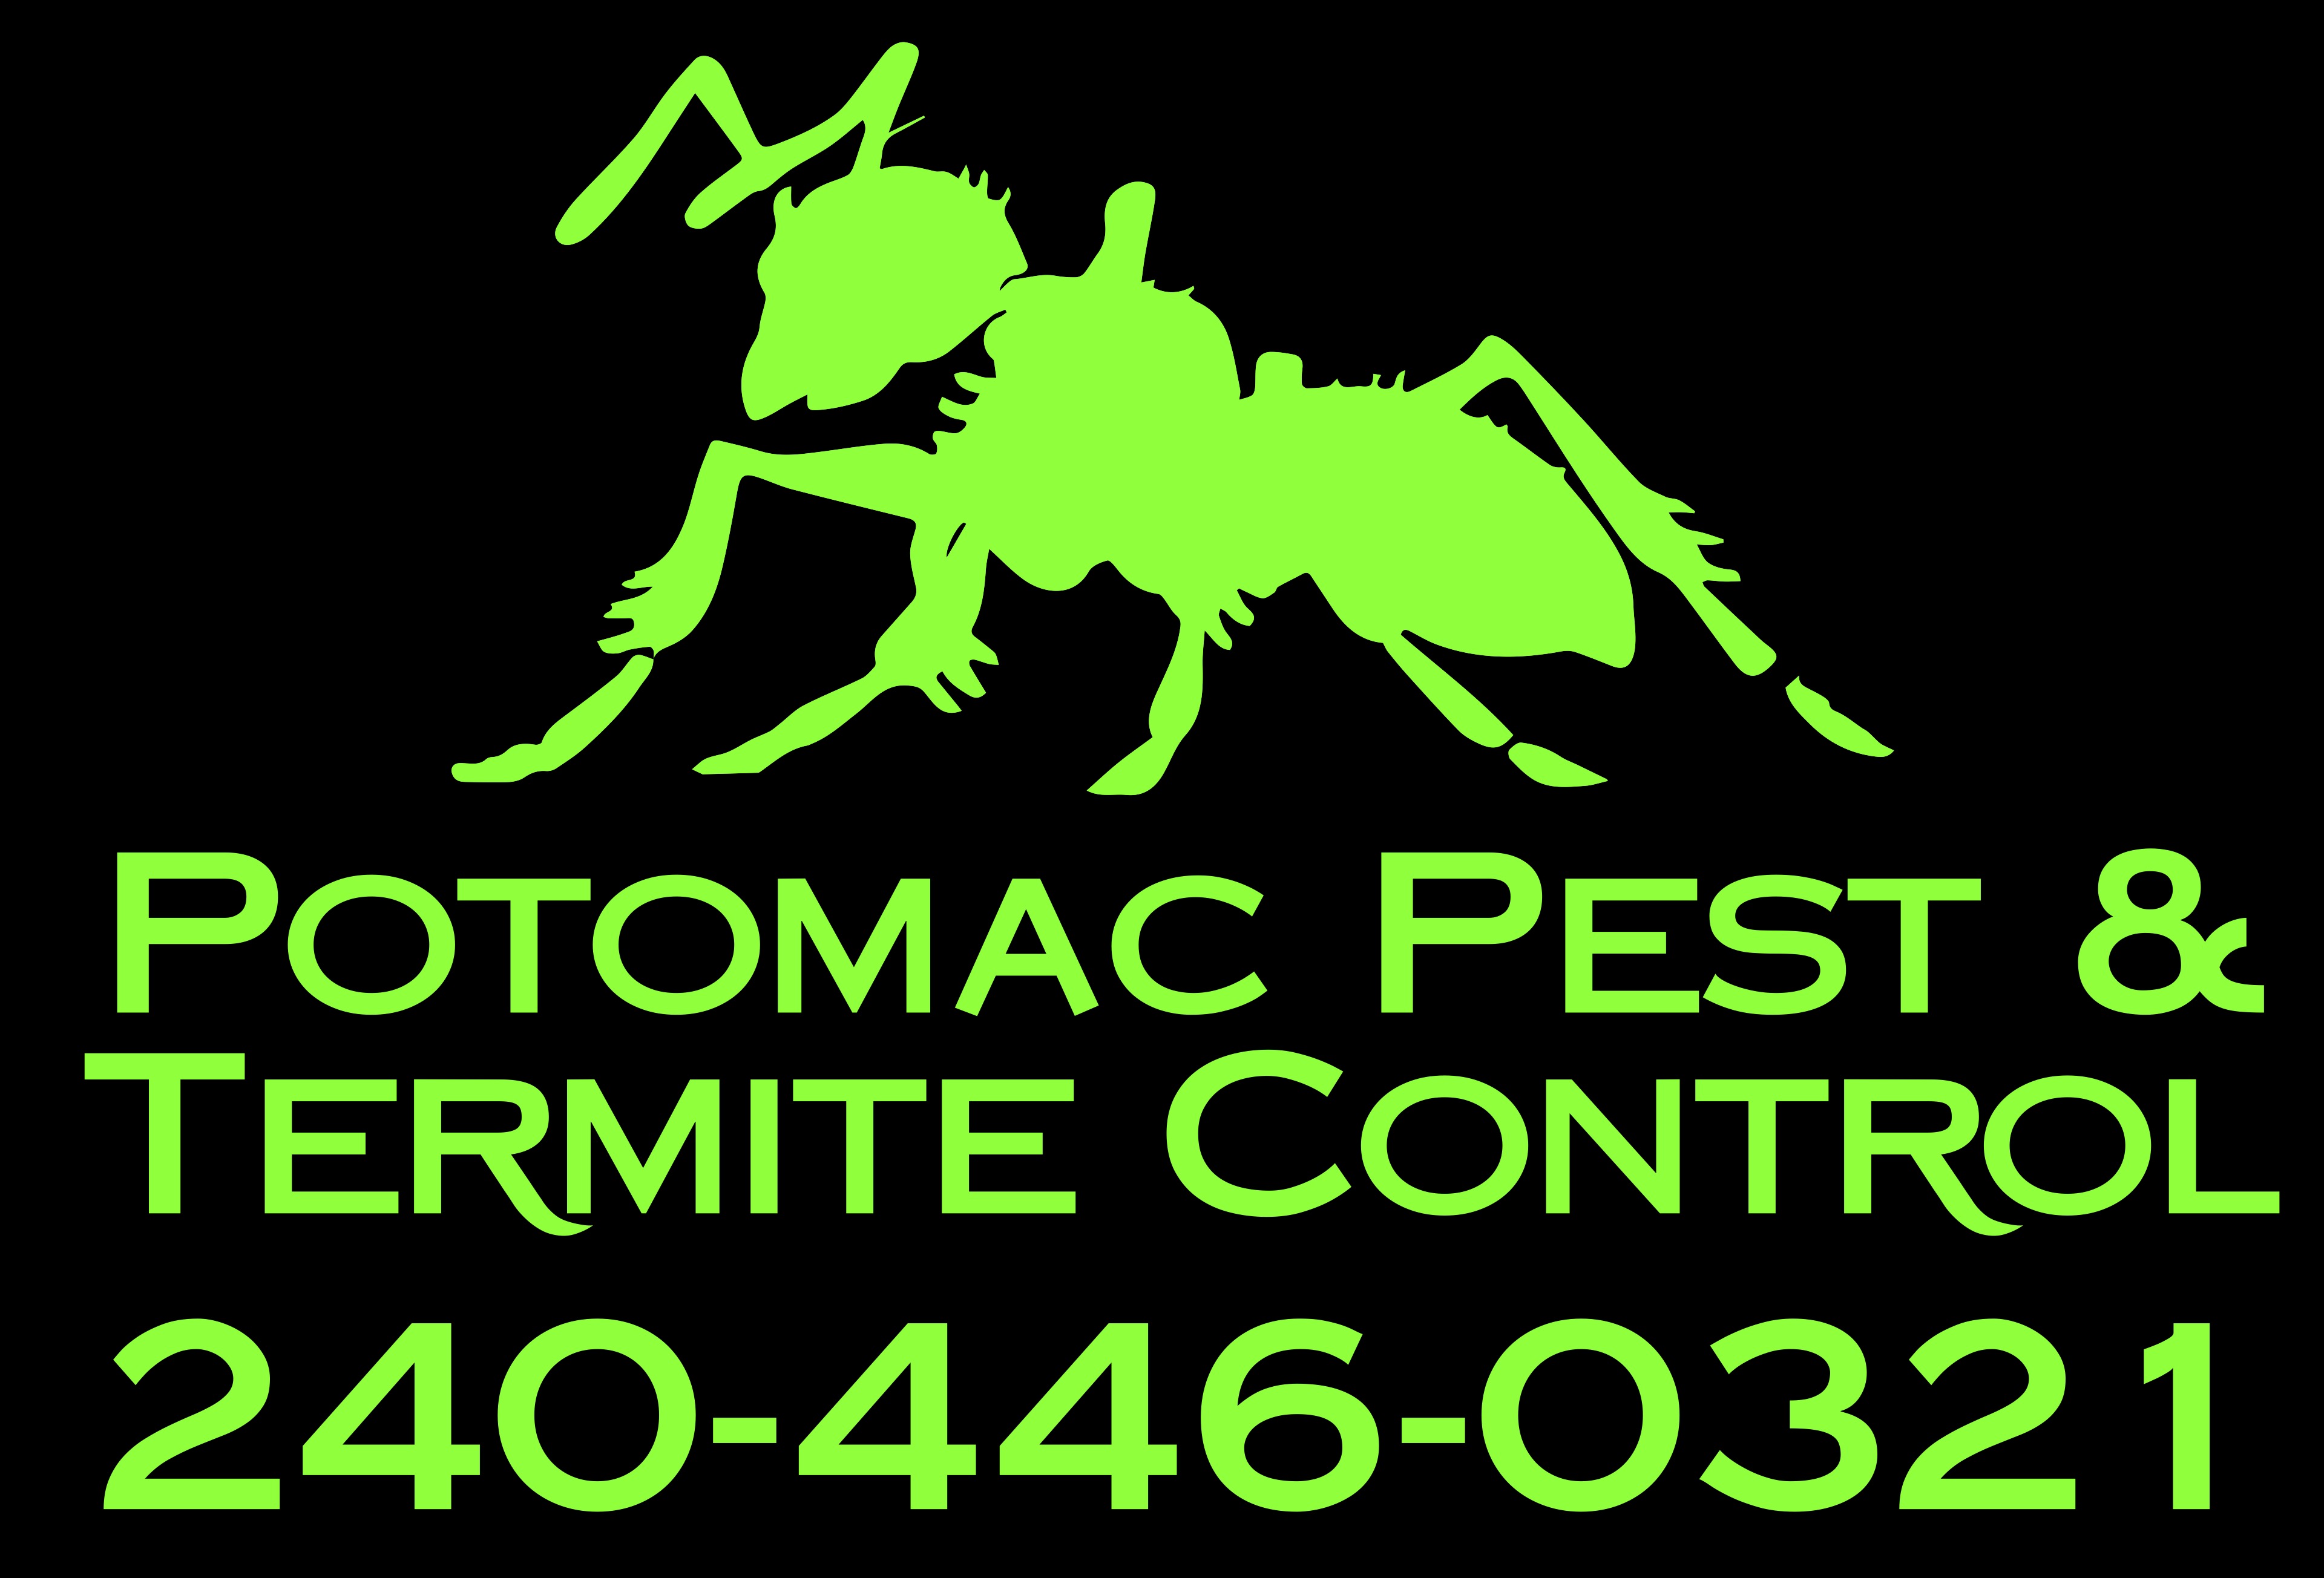 Potomac Pest and Termite Control